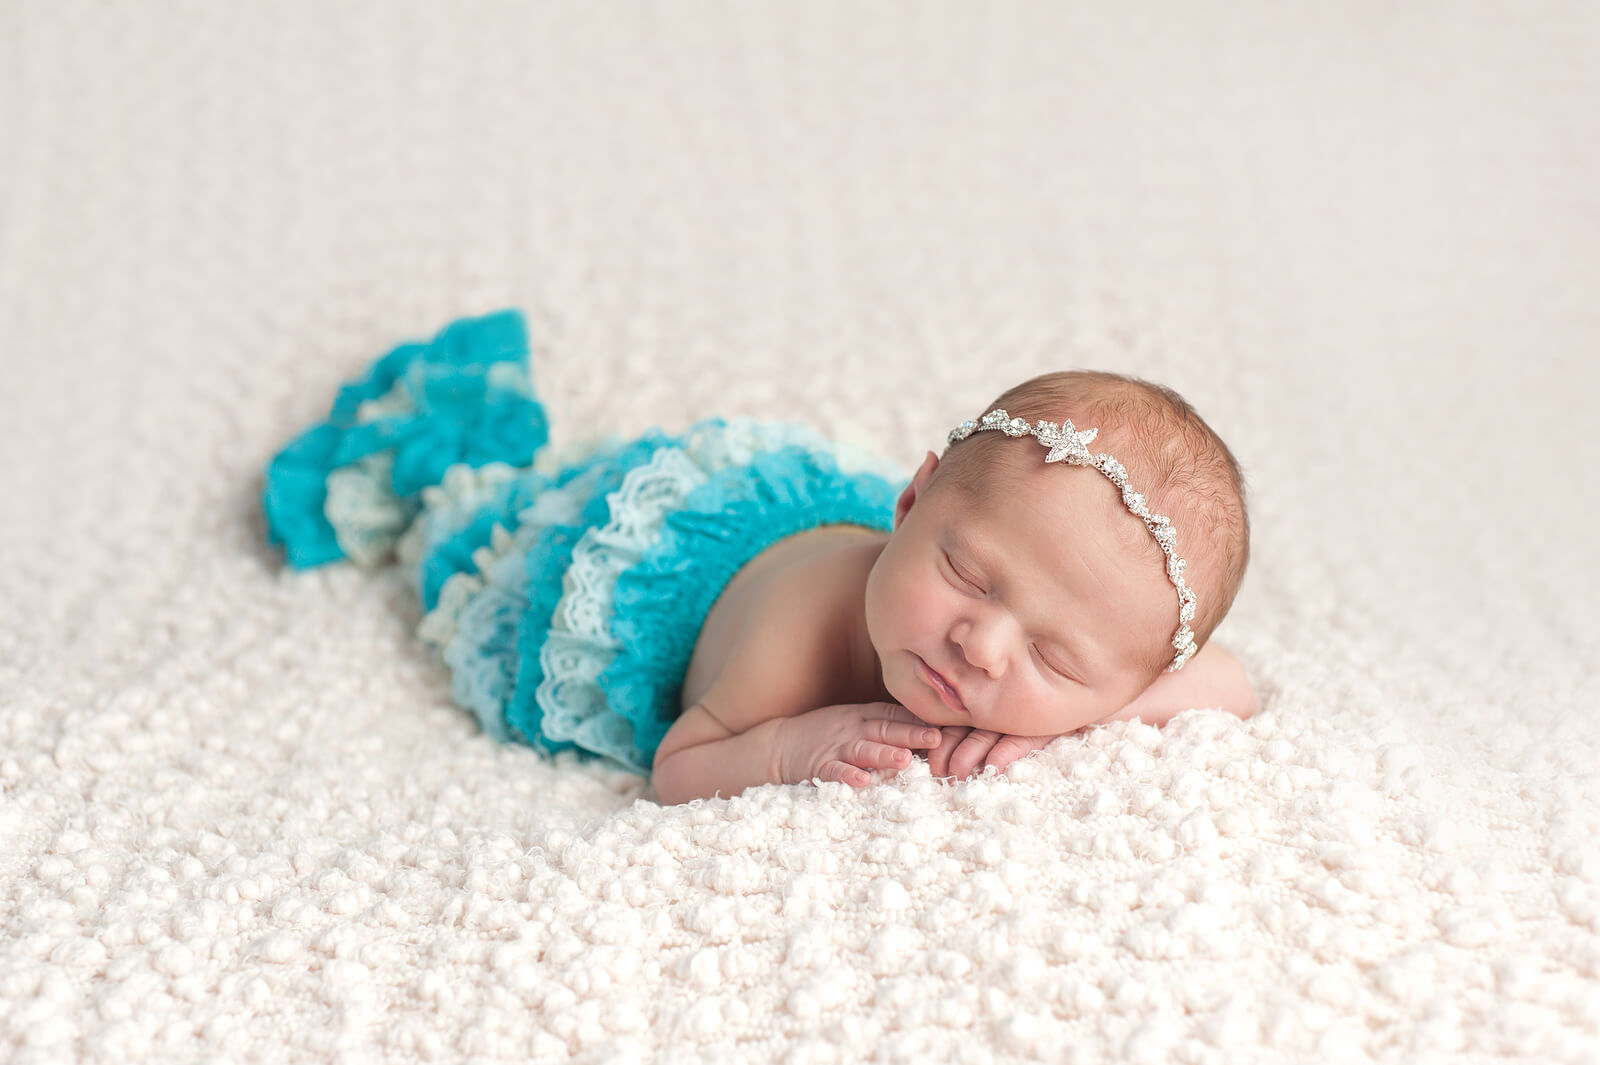 A newborn baby girl dressed as a mermaid.